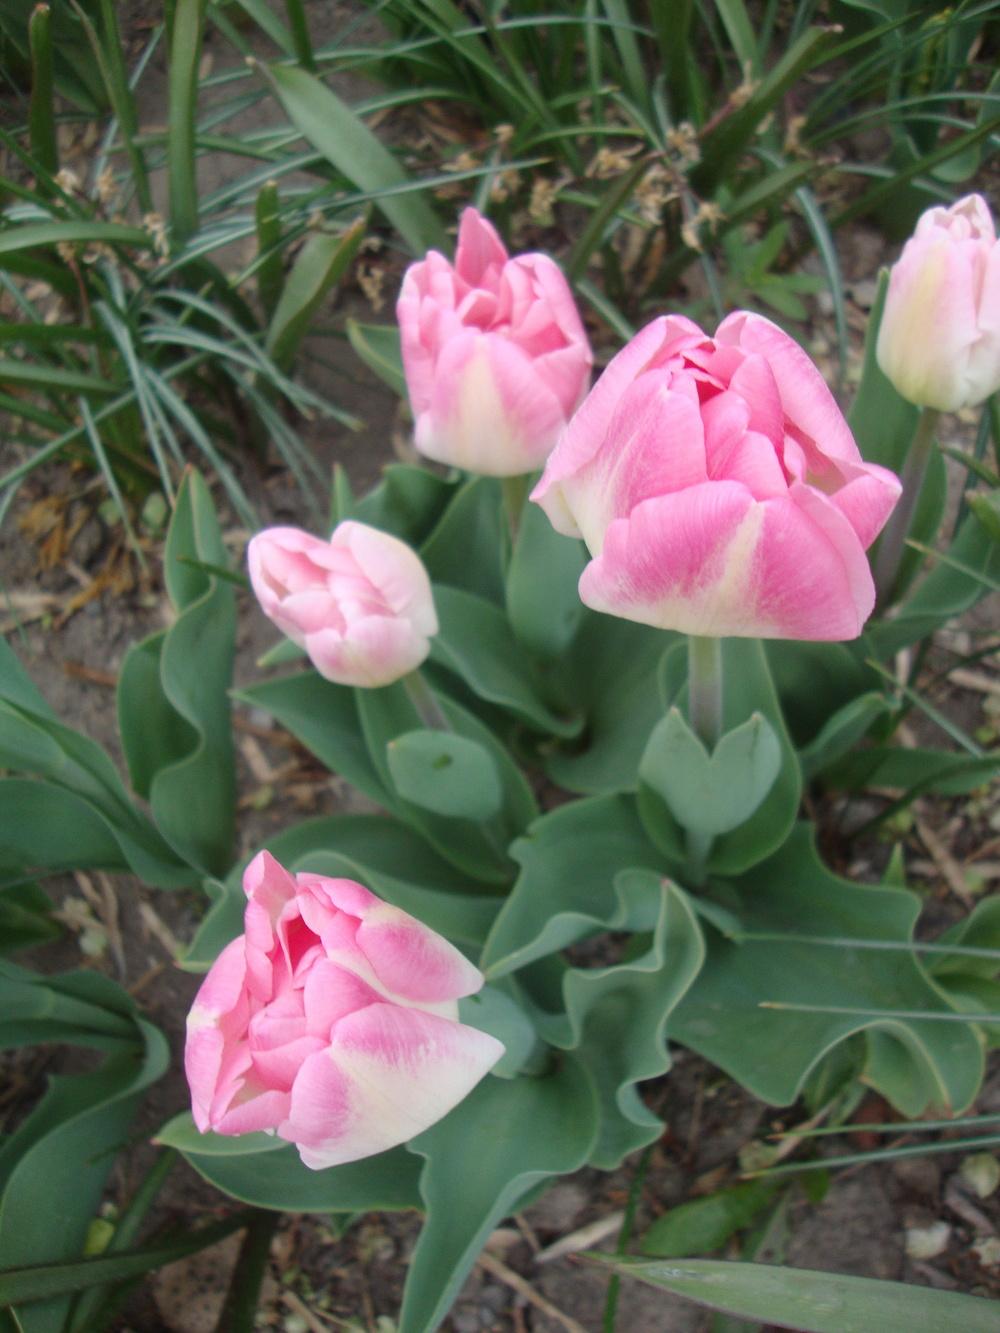 Photo of Tulips (Tulipa) uploaded by Paul2032